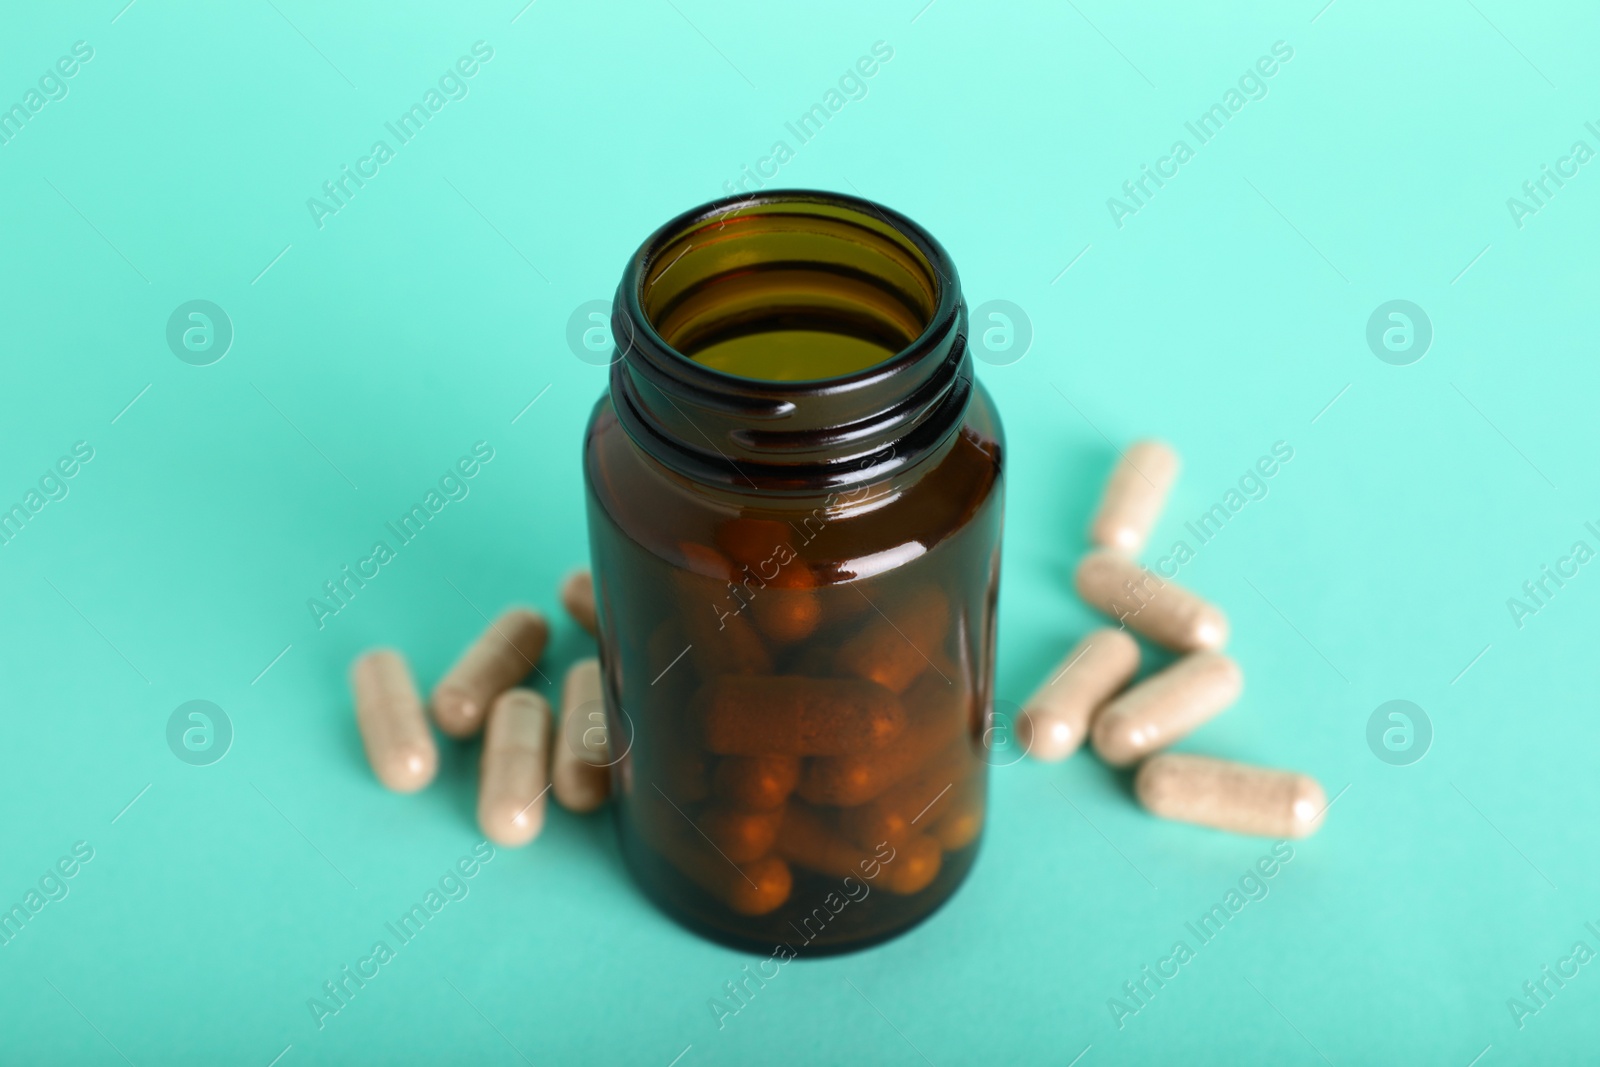 Photo of Gelatin capsules and bottle on turquoise background, closeup